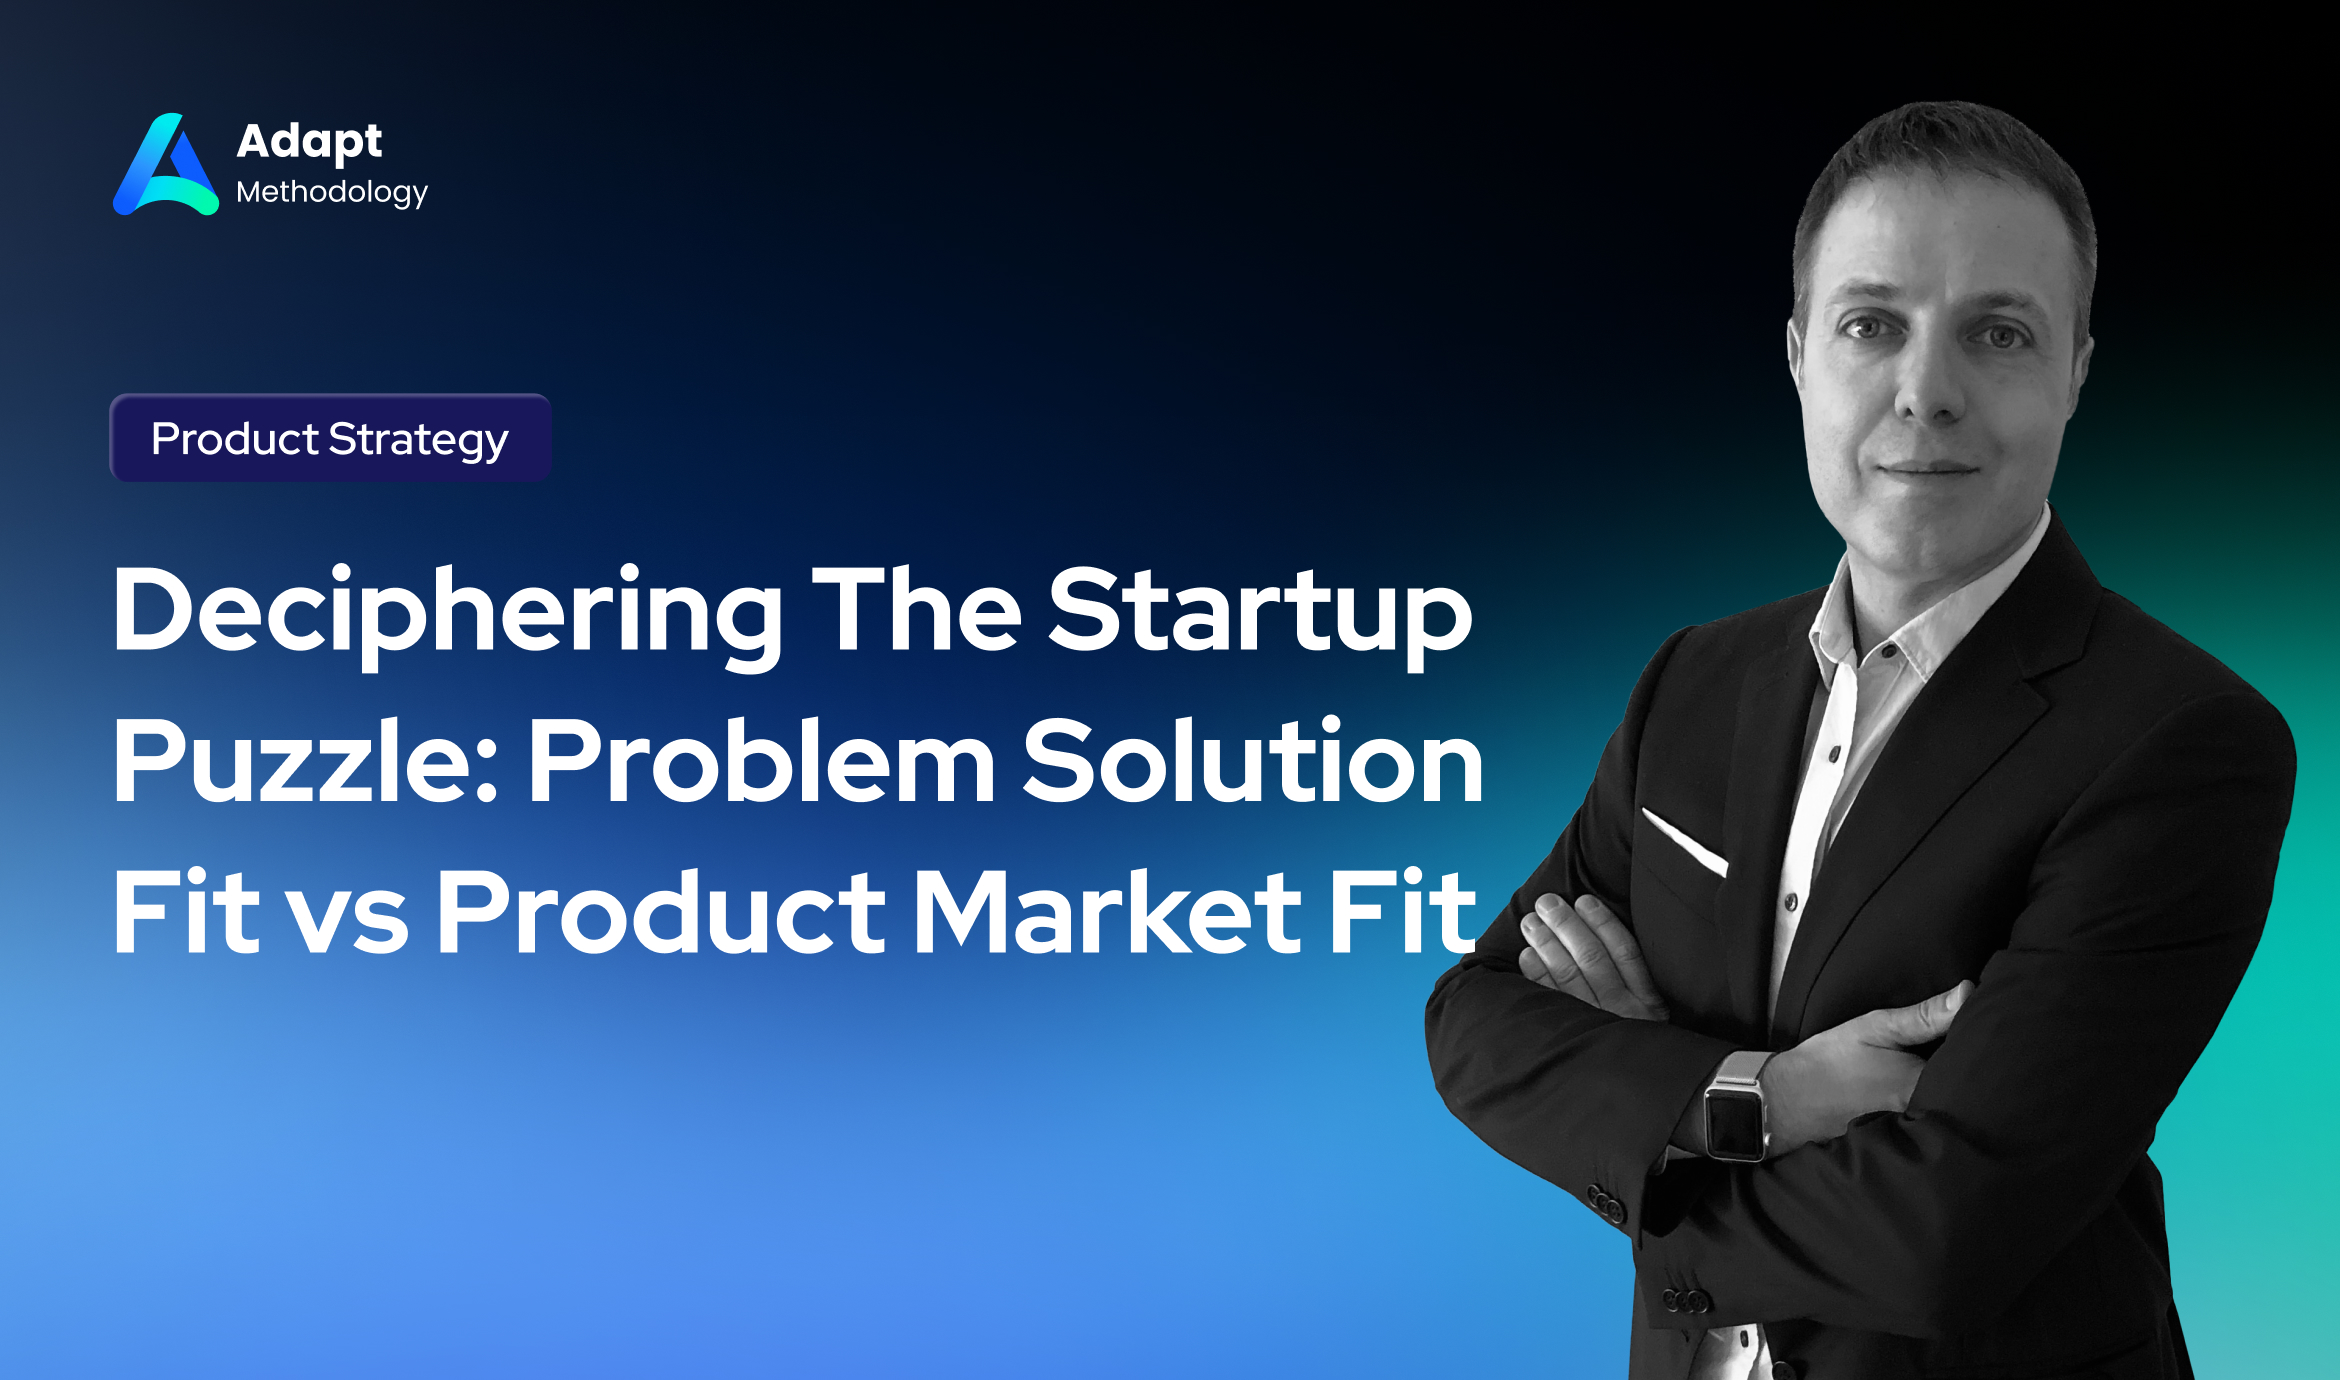 Deciphering The Startup Puzzle - Problem Solution Fit vs Product Market Fit